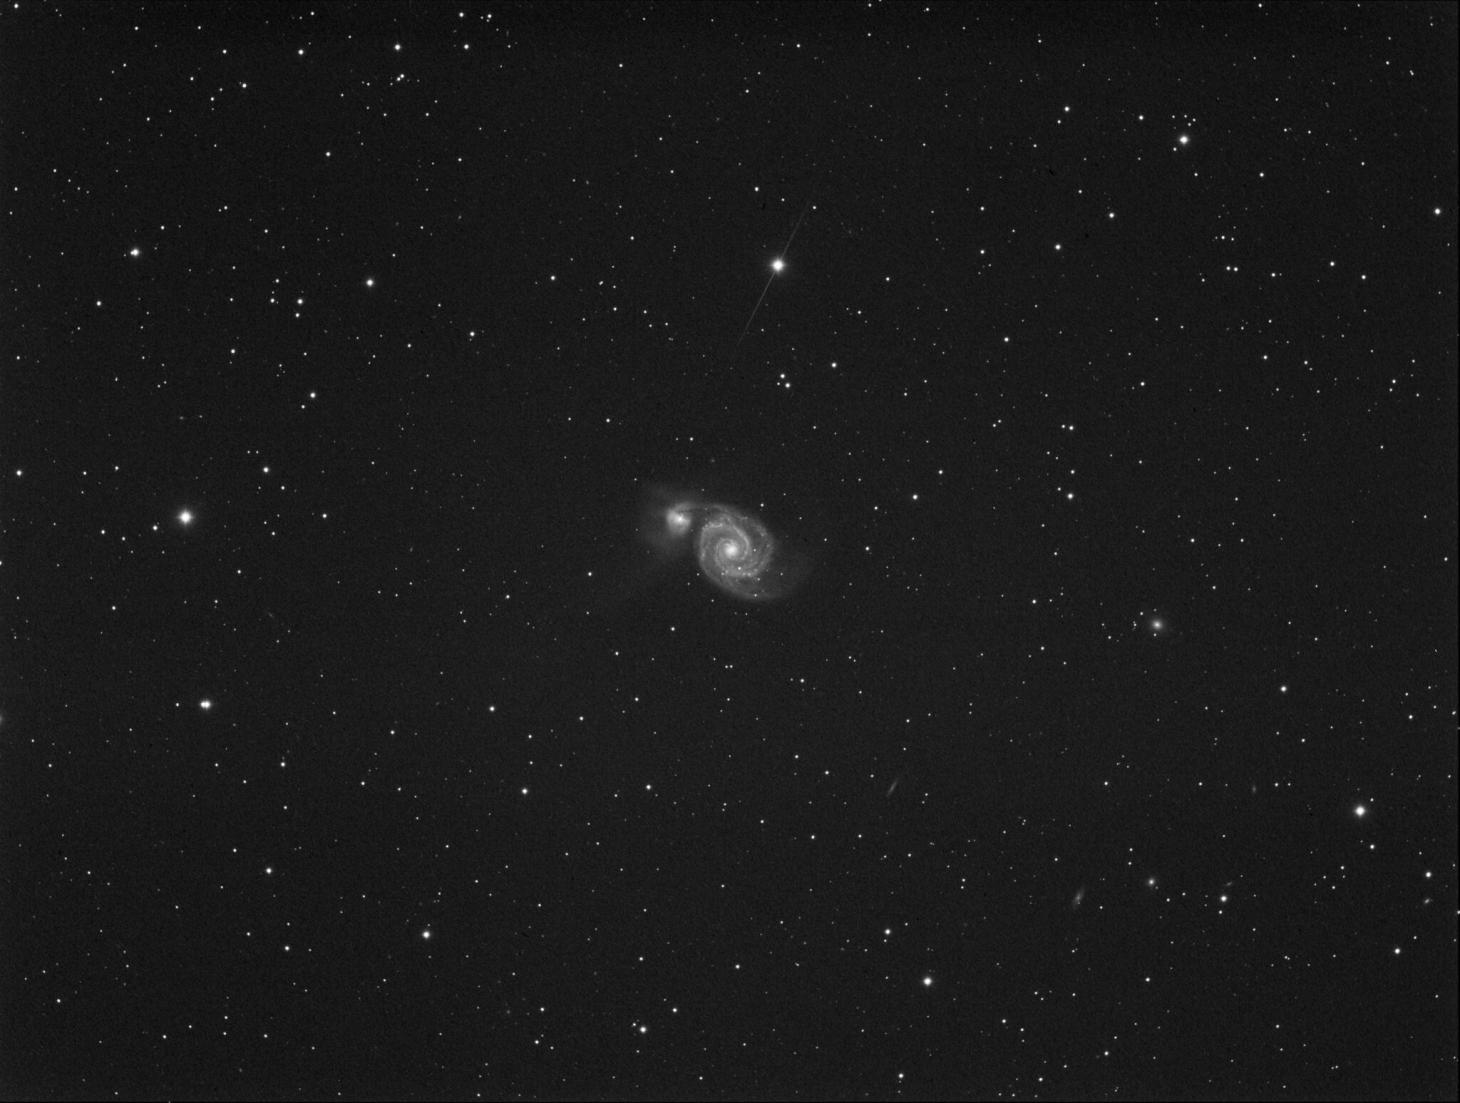 Telescope image of Messier 51.